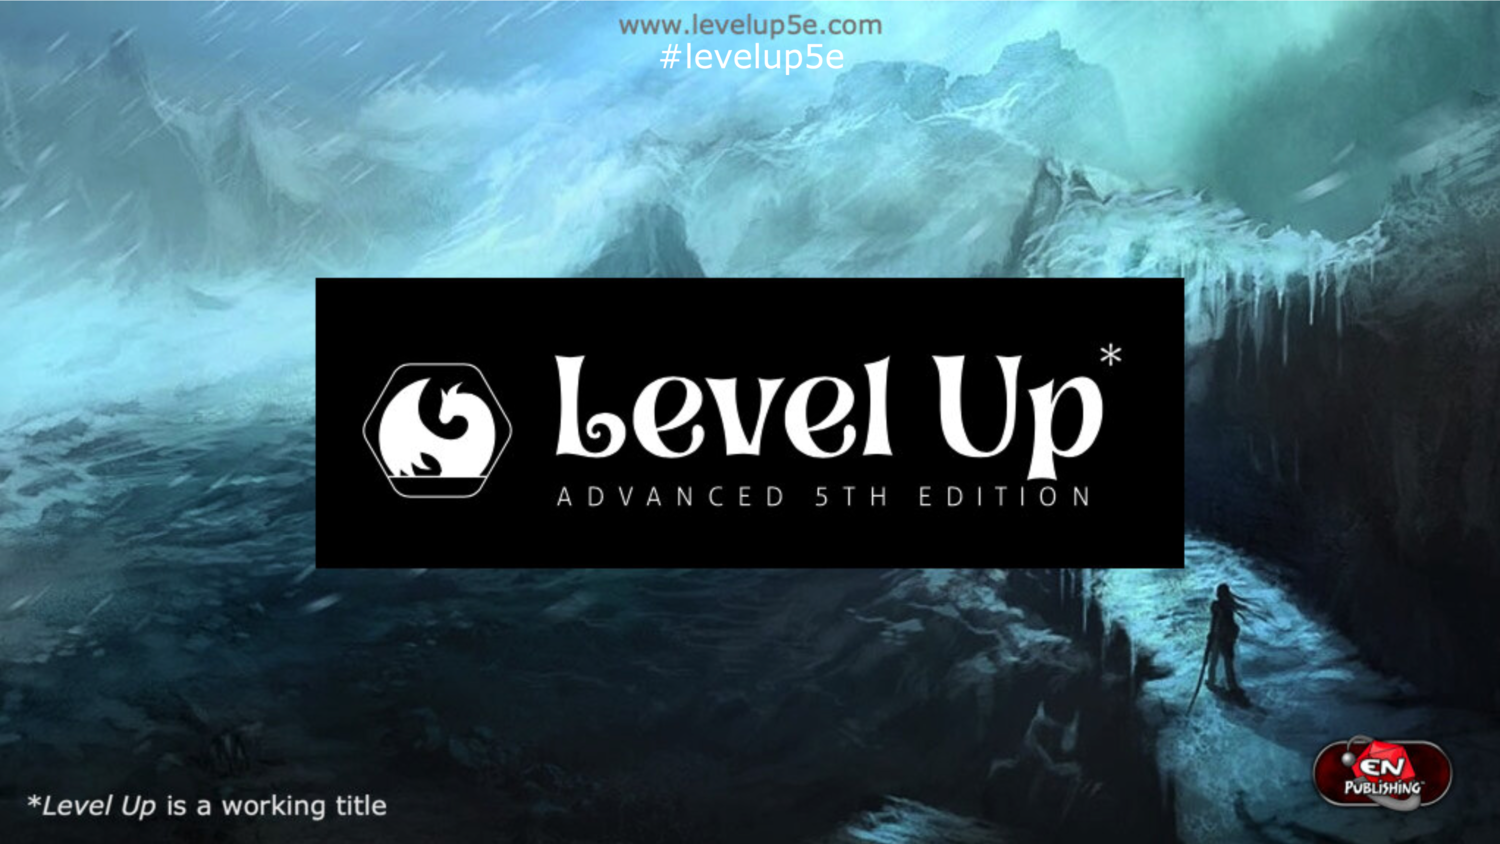 www.levelup5e.com